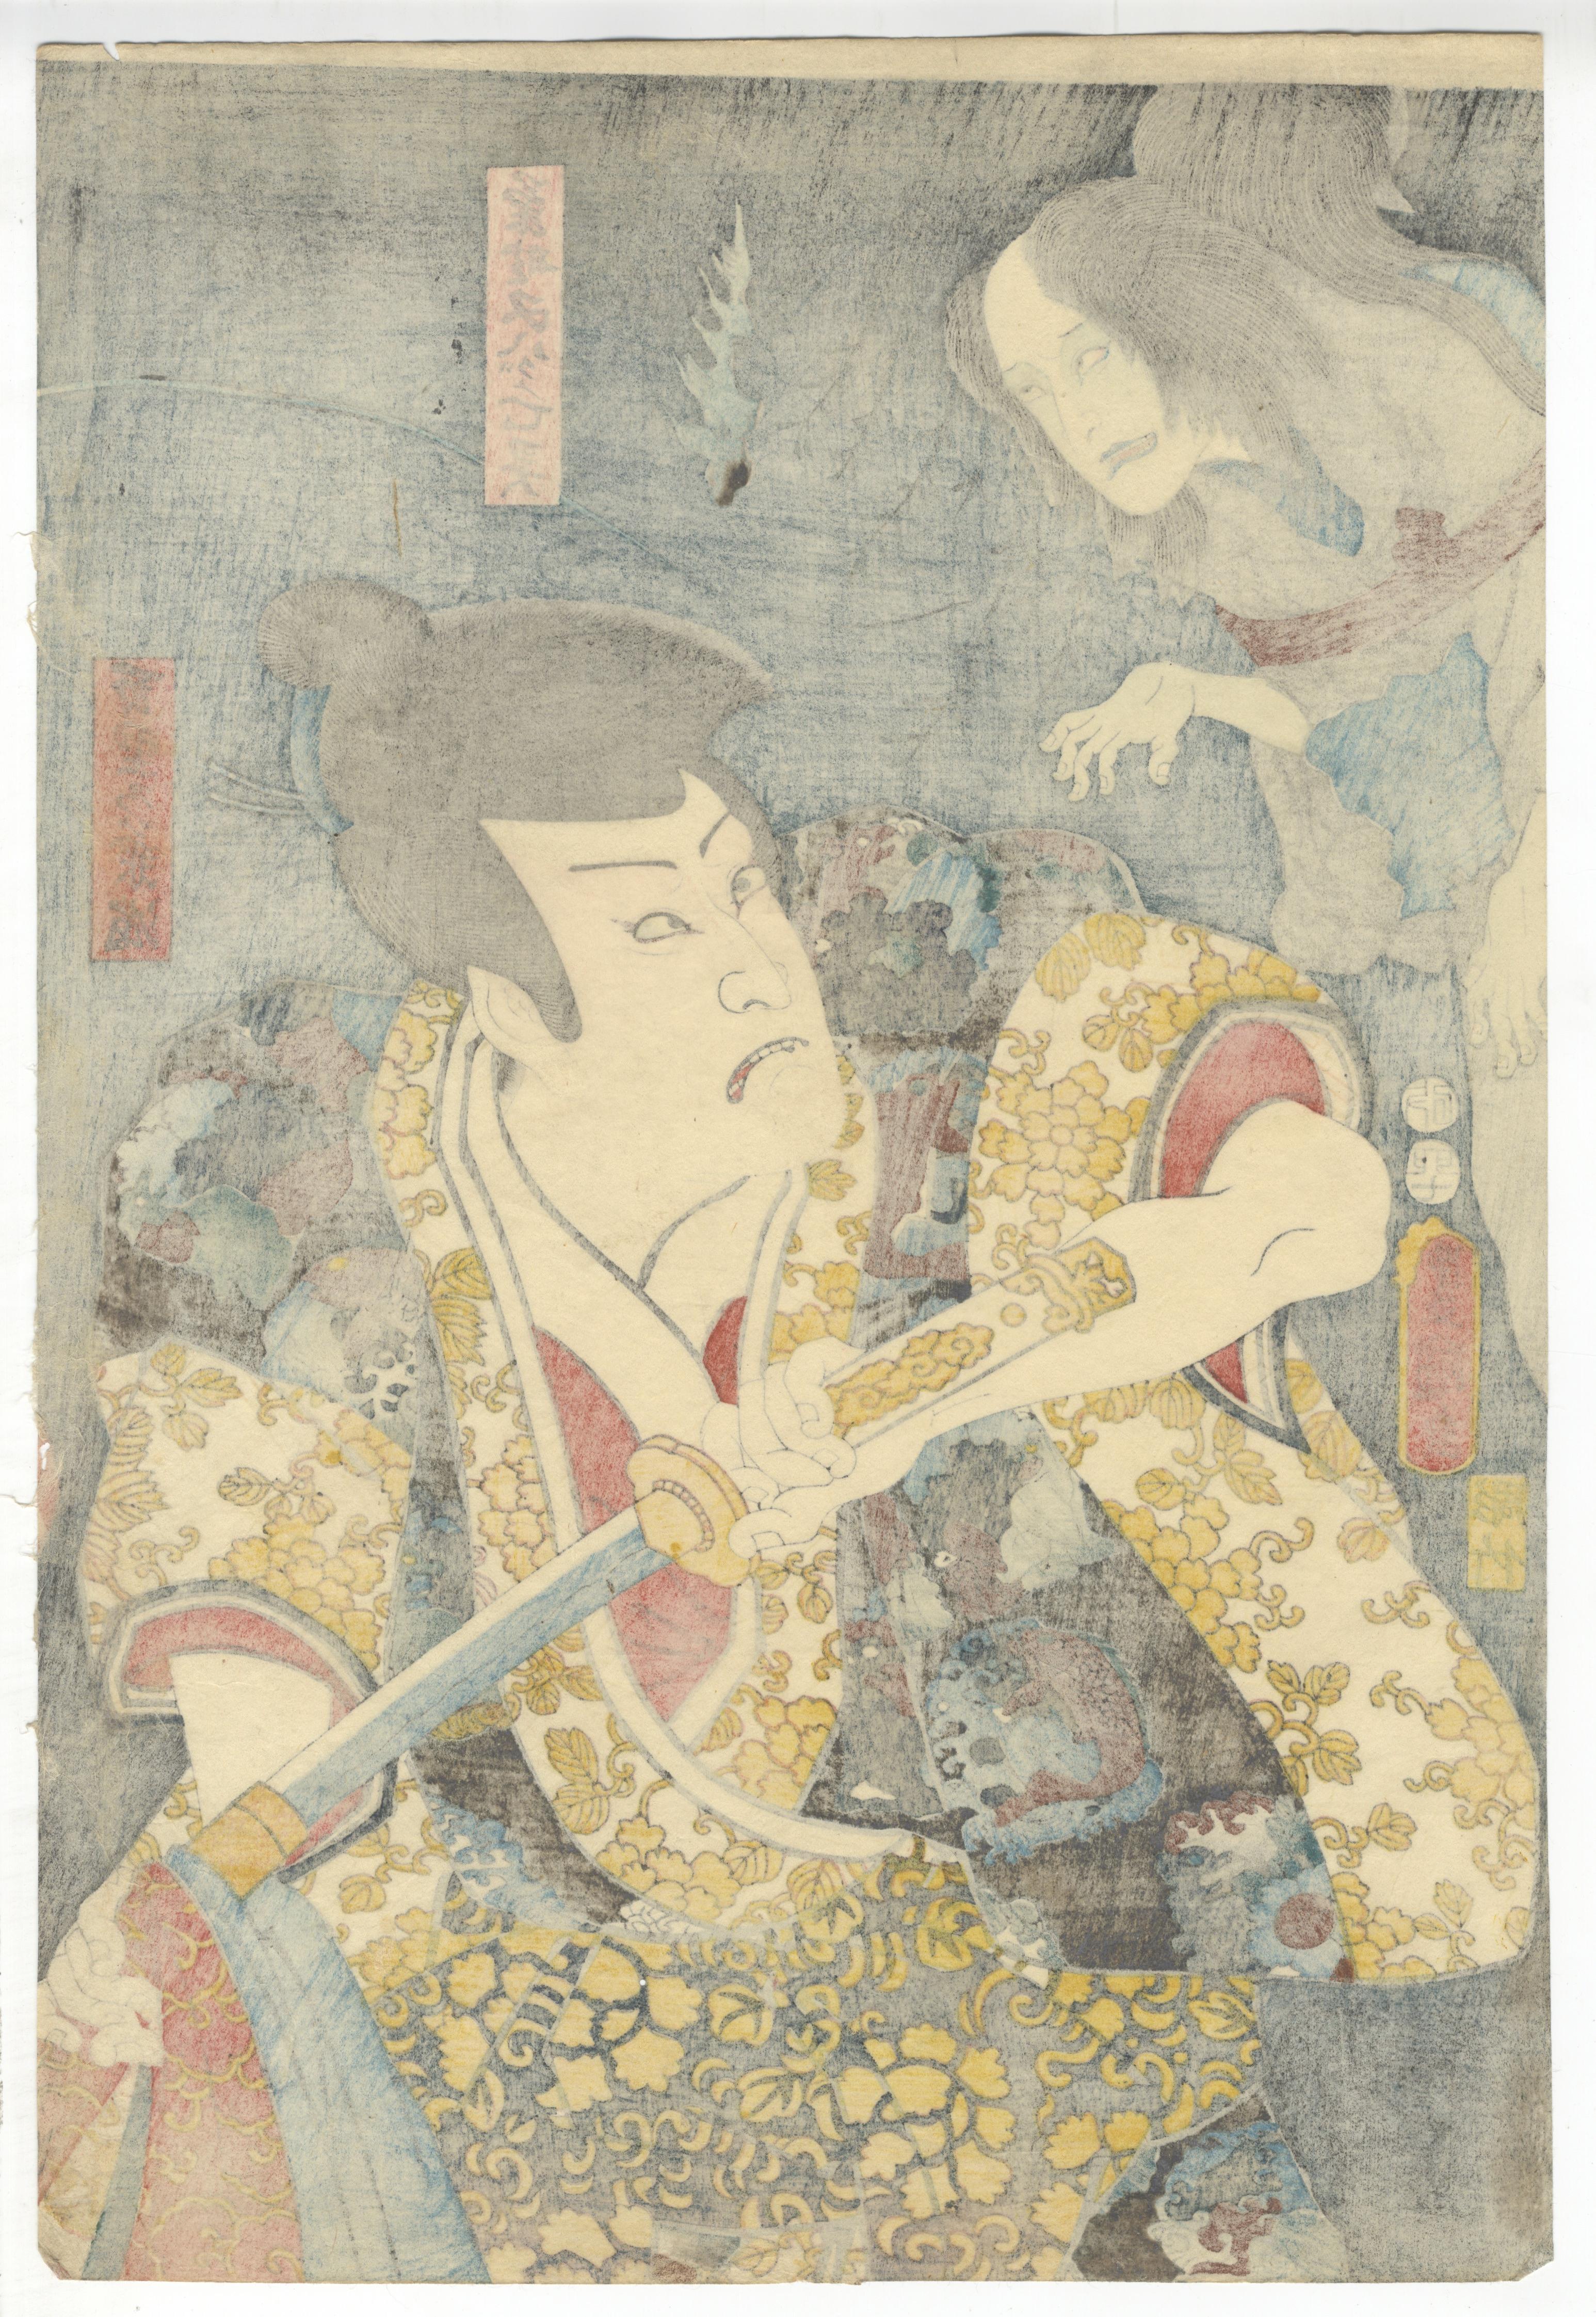 Utagawa Toyokuni Diptych Japanese Woodblock Print Ukiyo-e, Tragic Love Story In Good Condition For Sale In London, GB